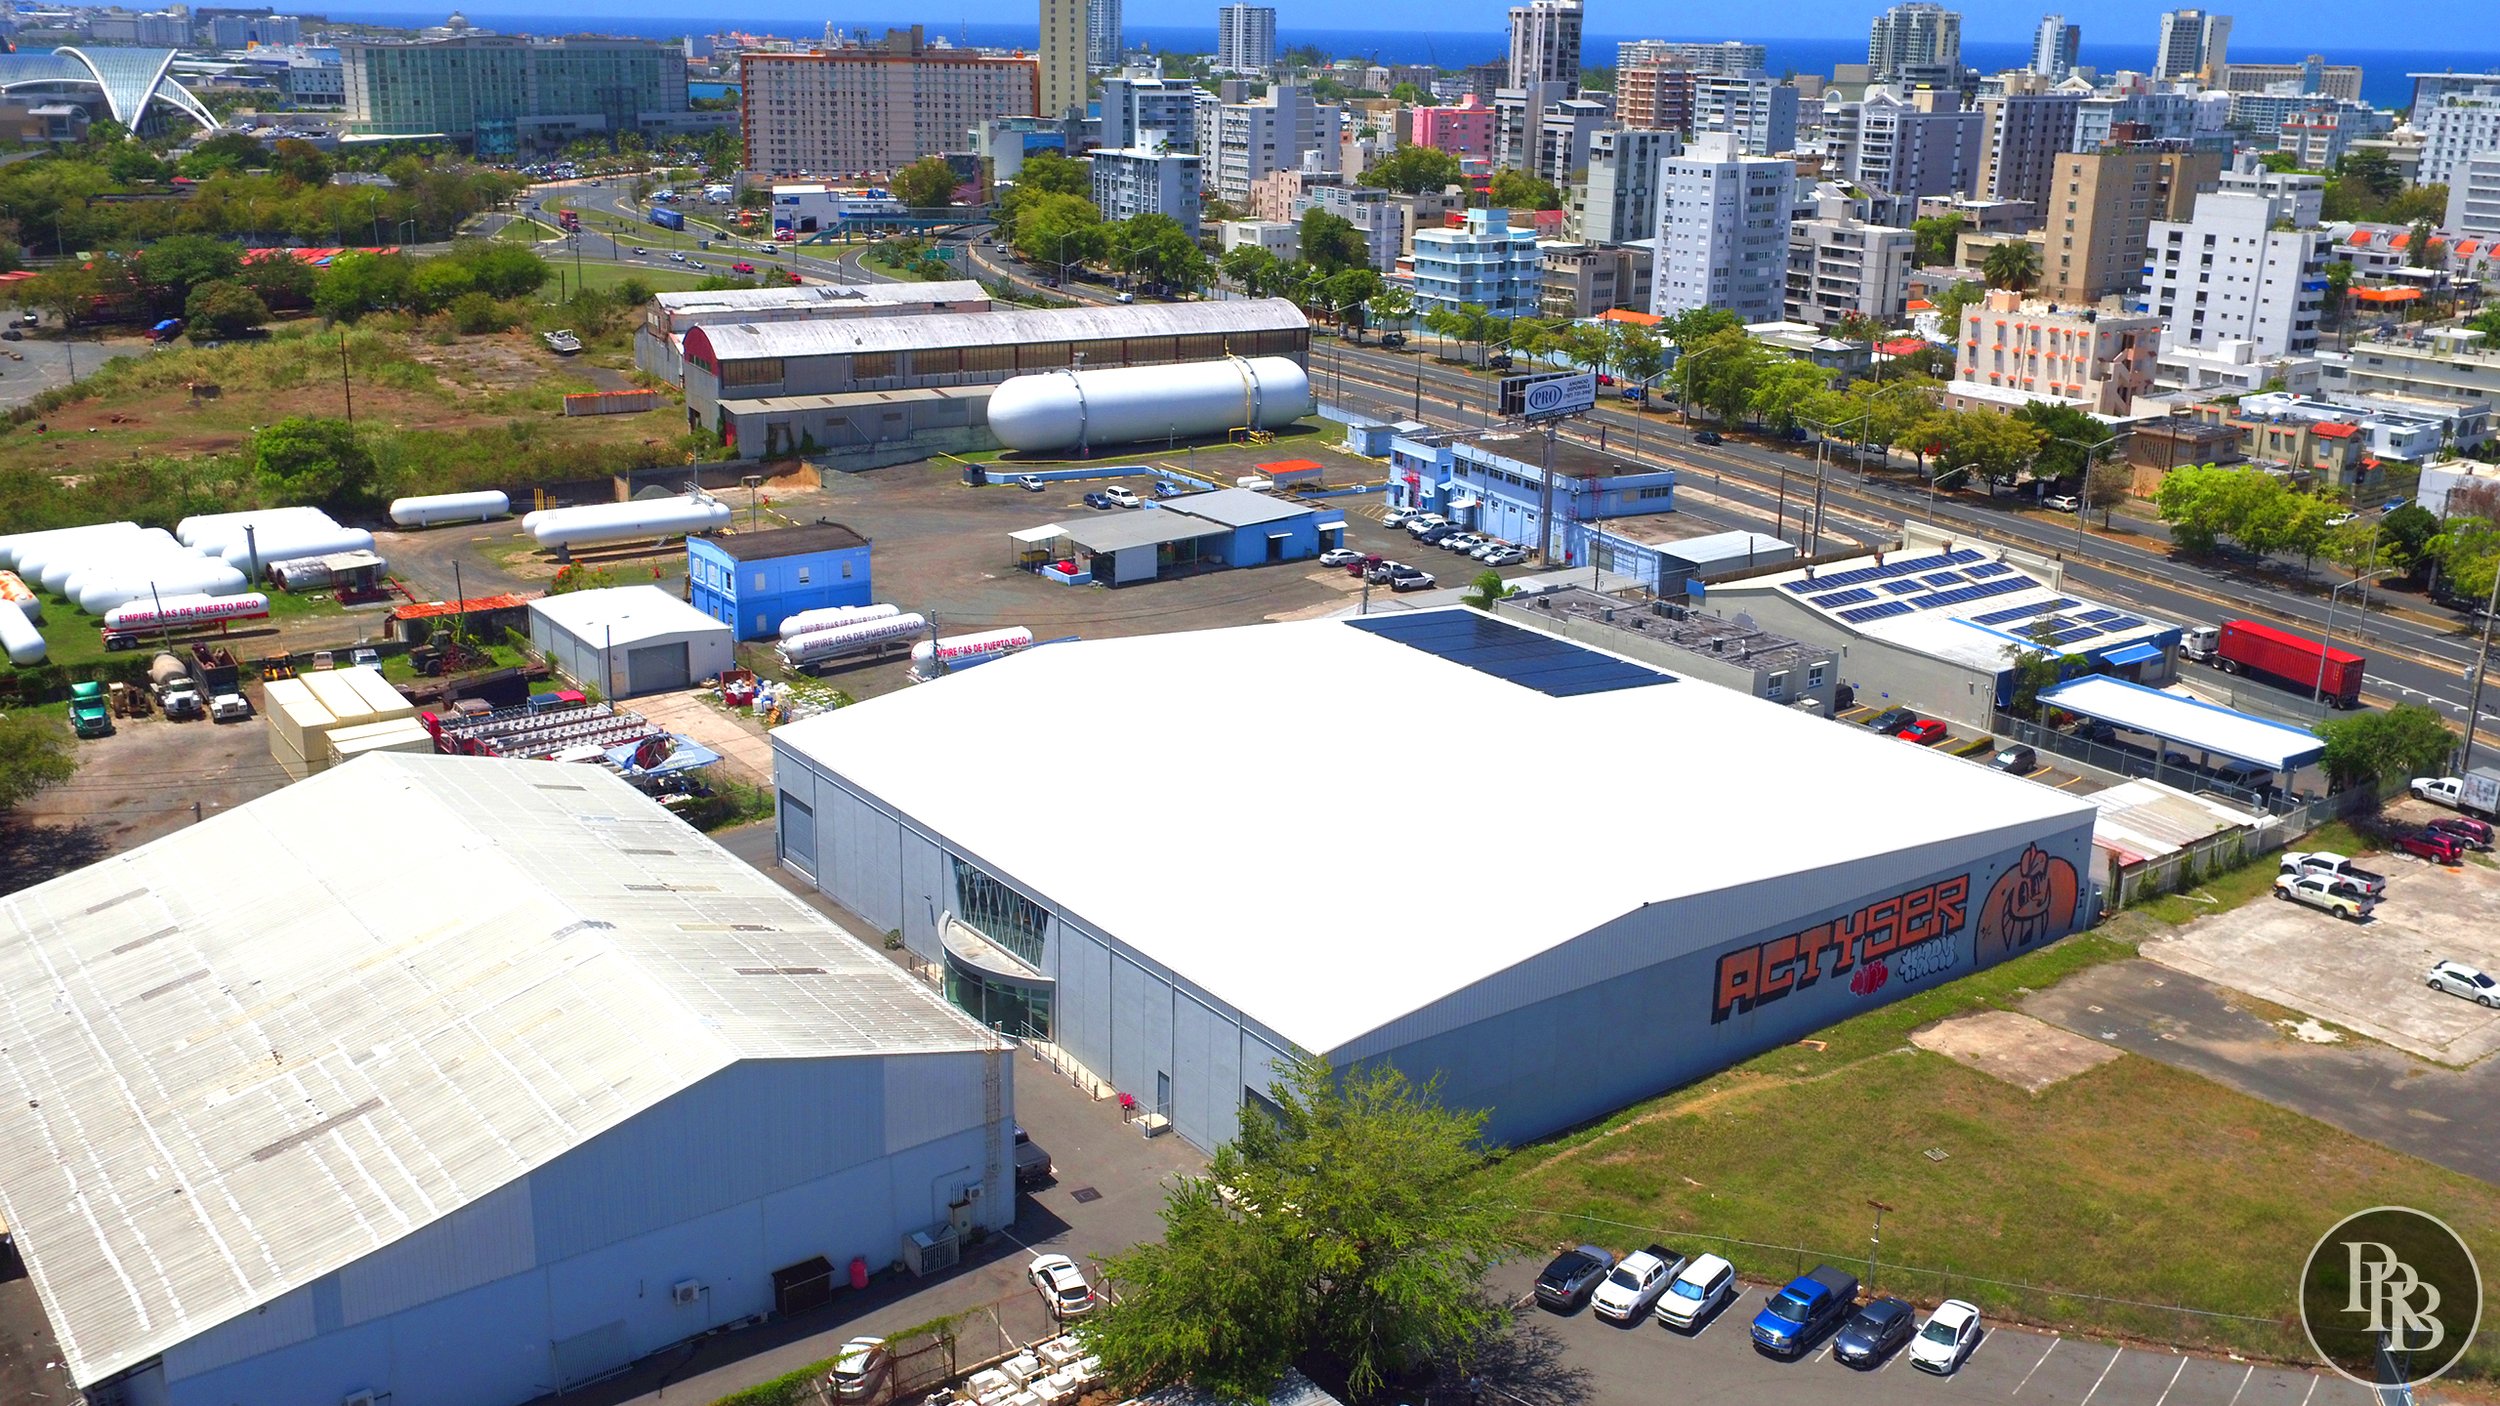 Miramar 41,000 sqft warehouse PRB logo #8.jpg